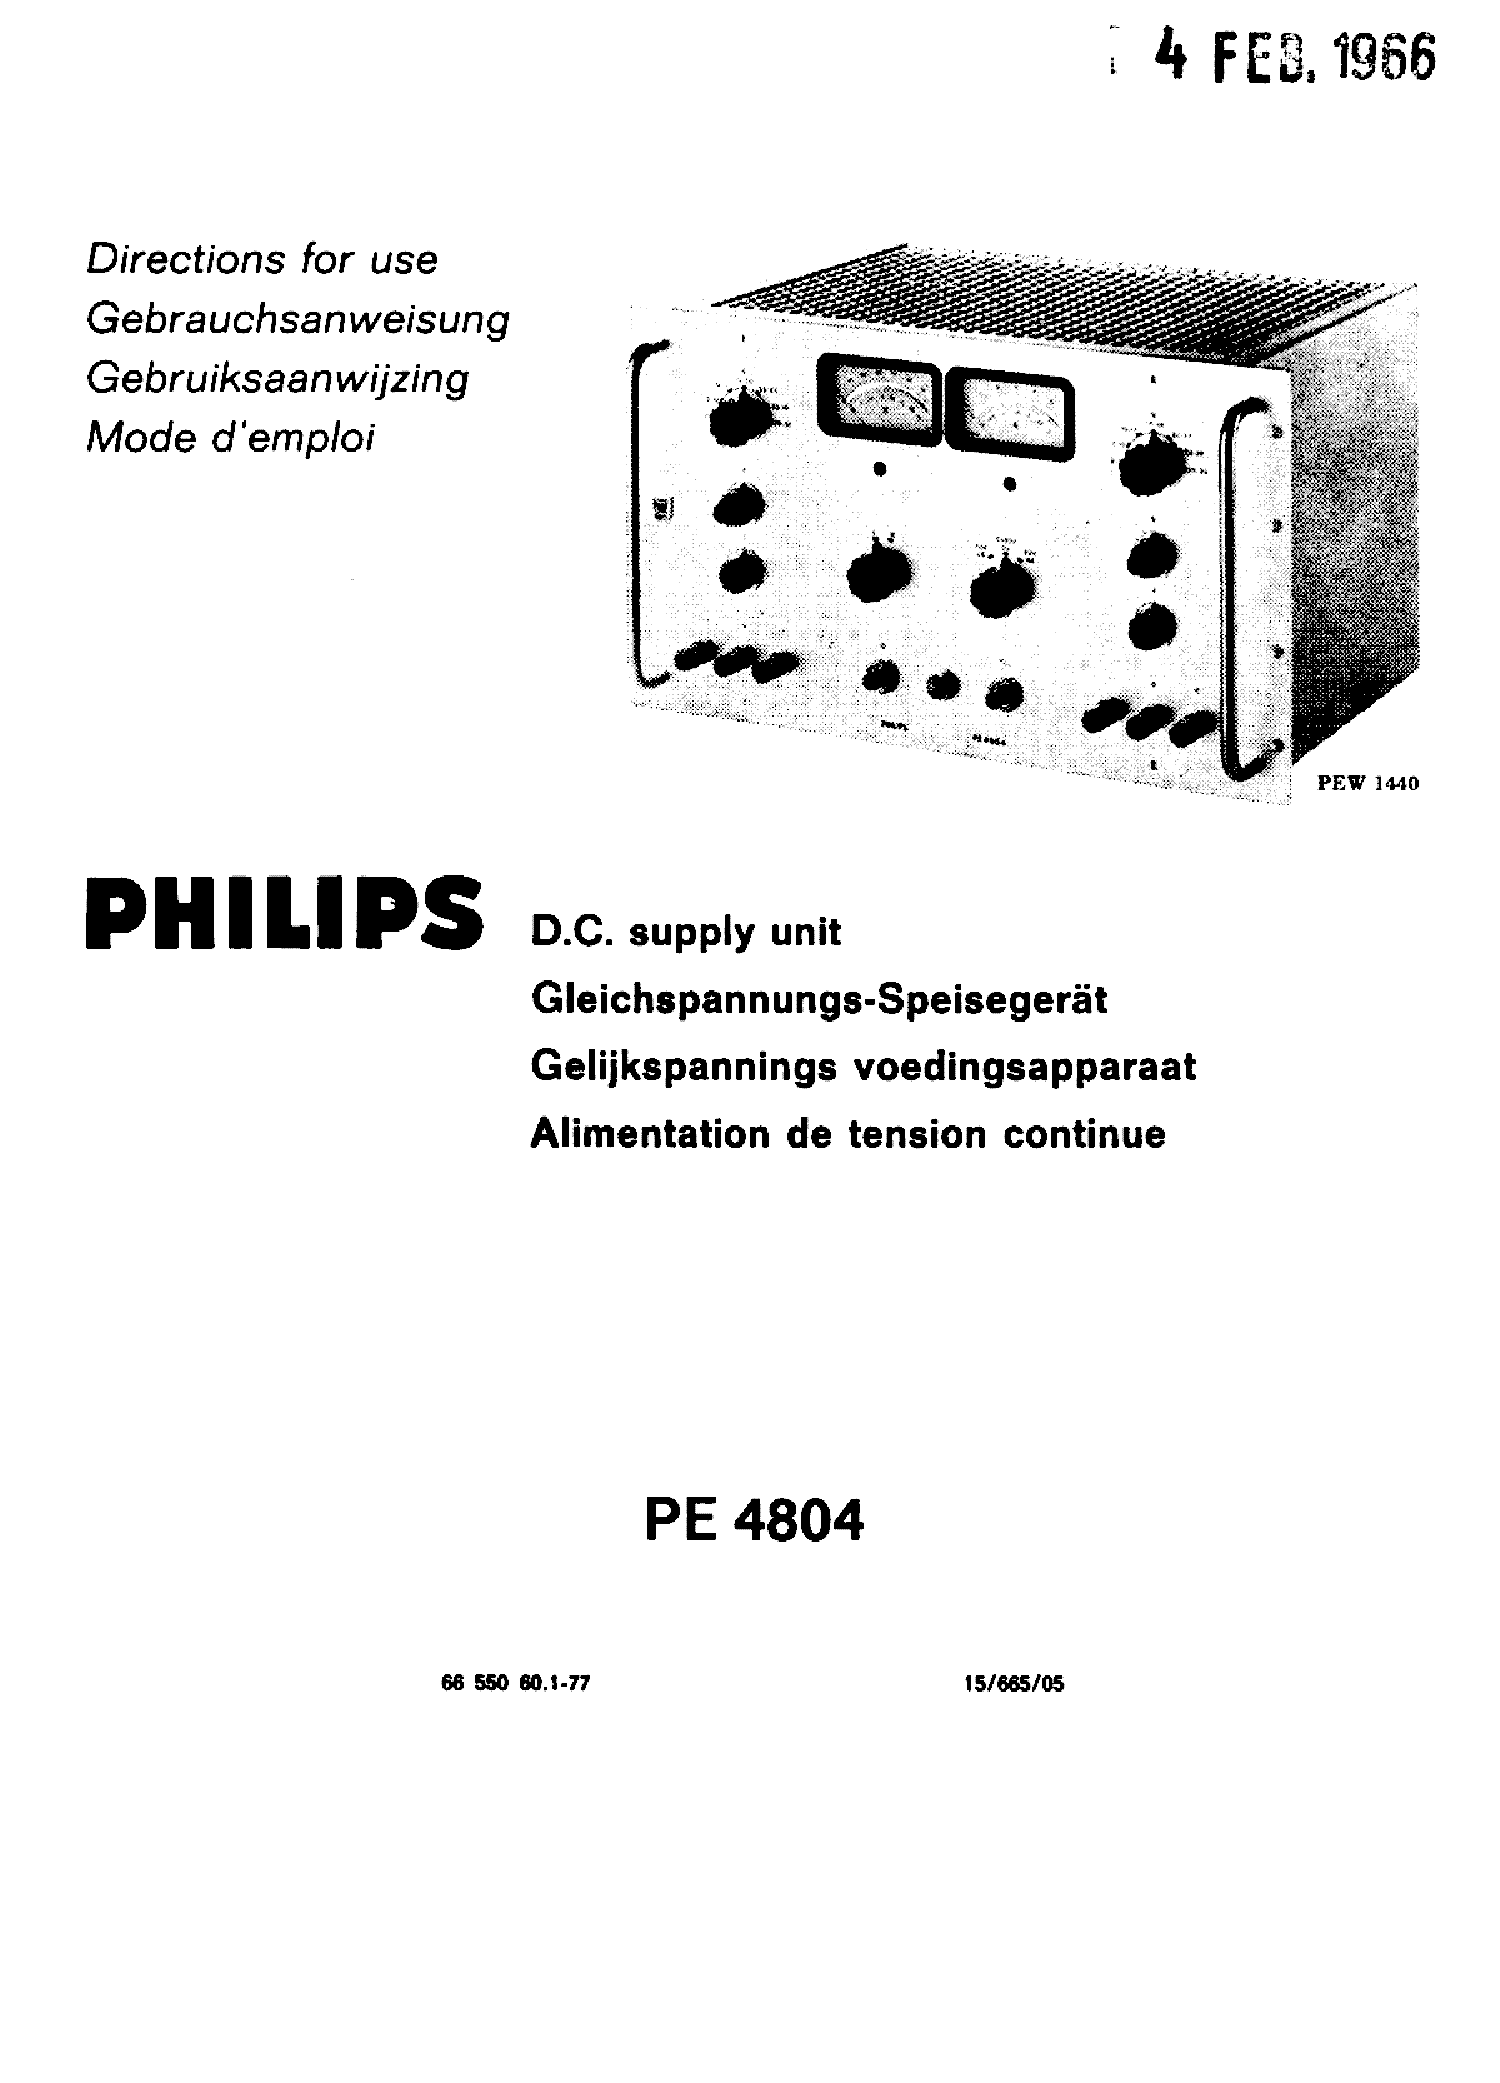 PHILIPS PE4804-05 2X0-35V,2A REGULATED DC PSU 1966 USR SM service manual (2nd page)